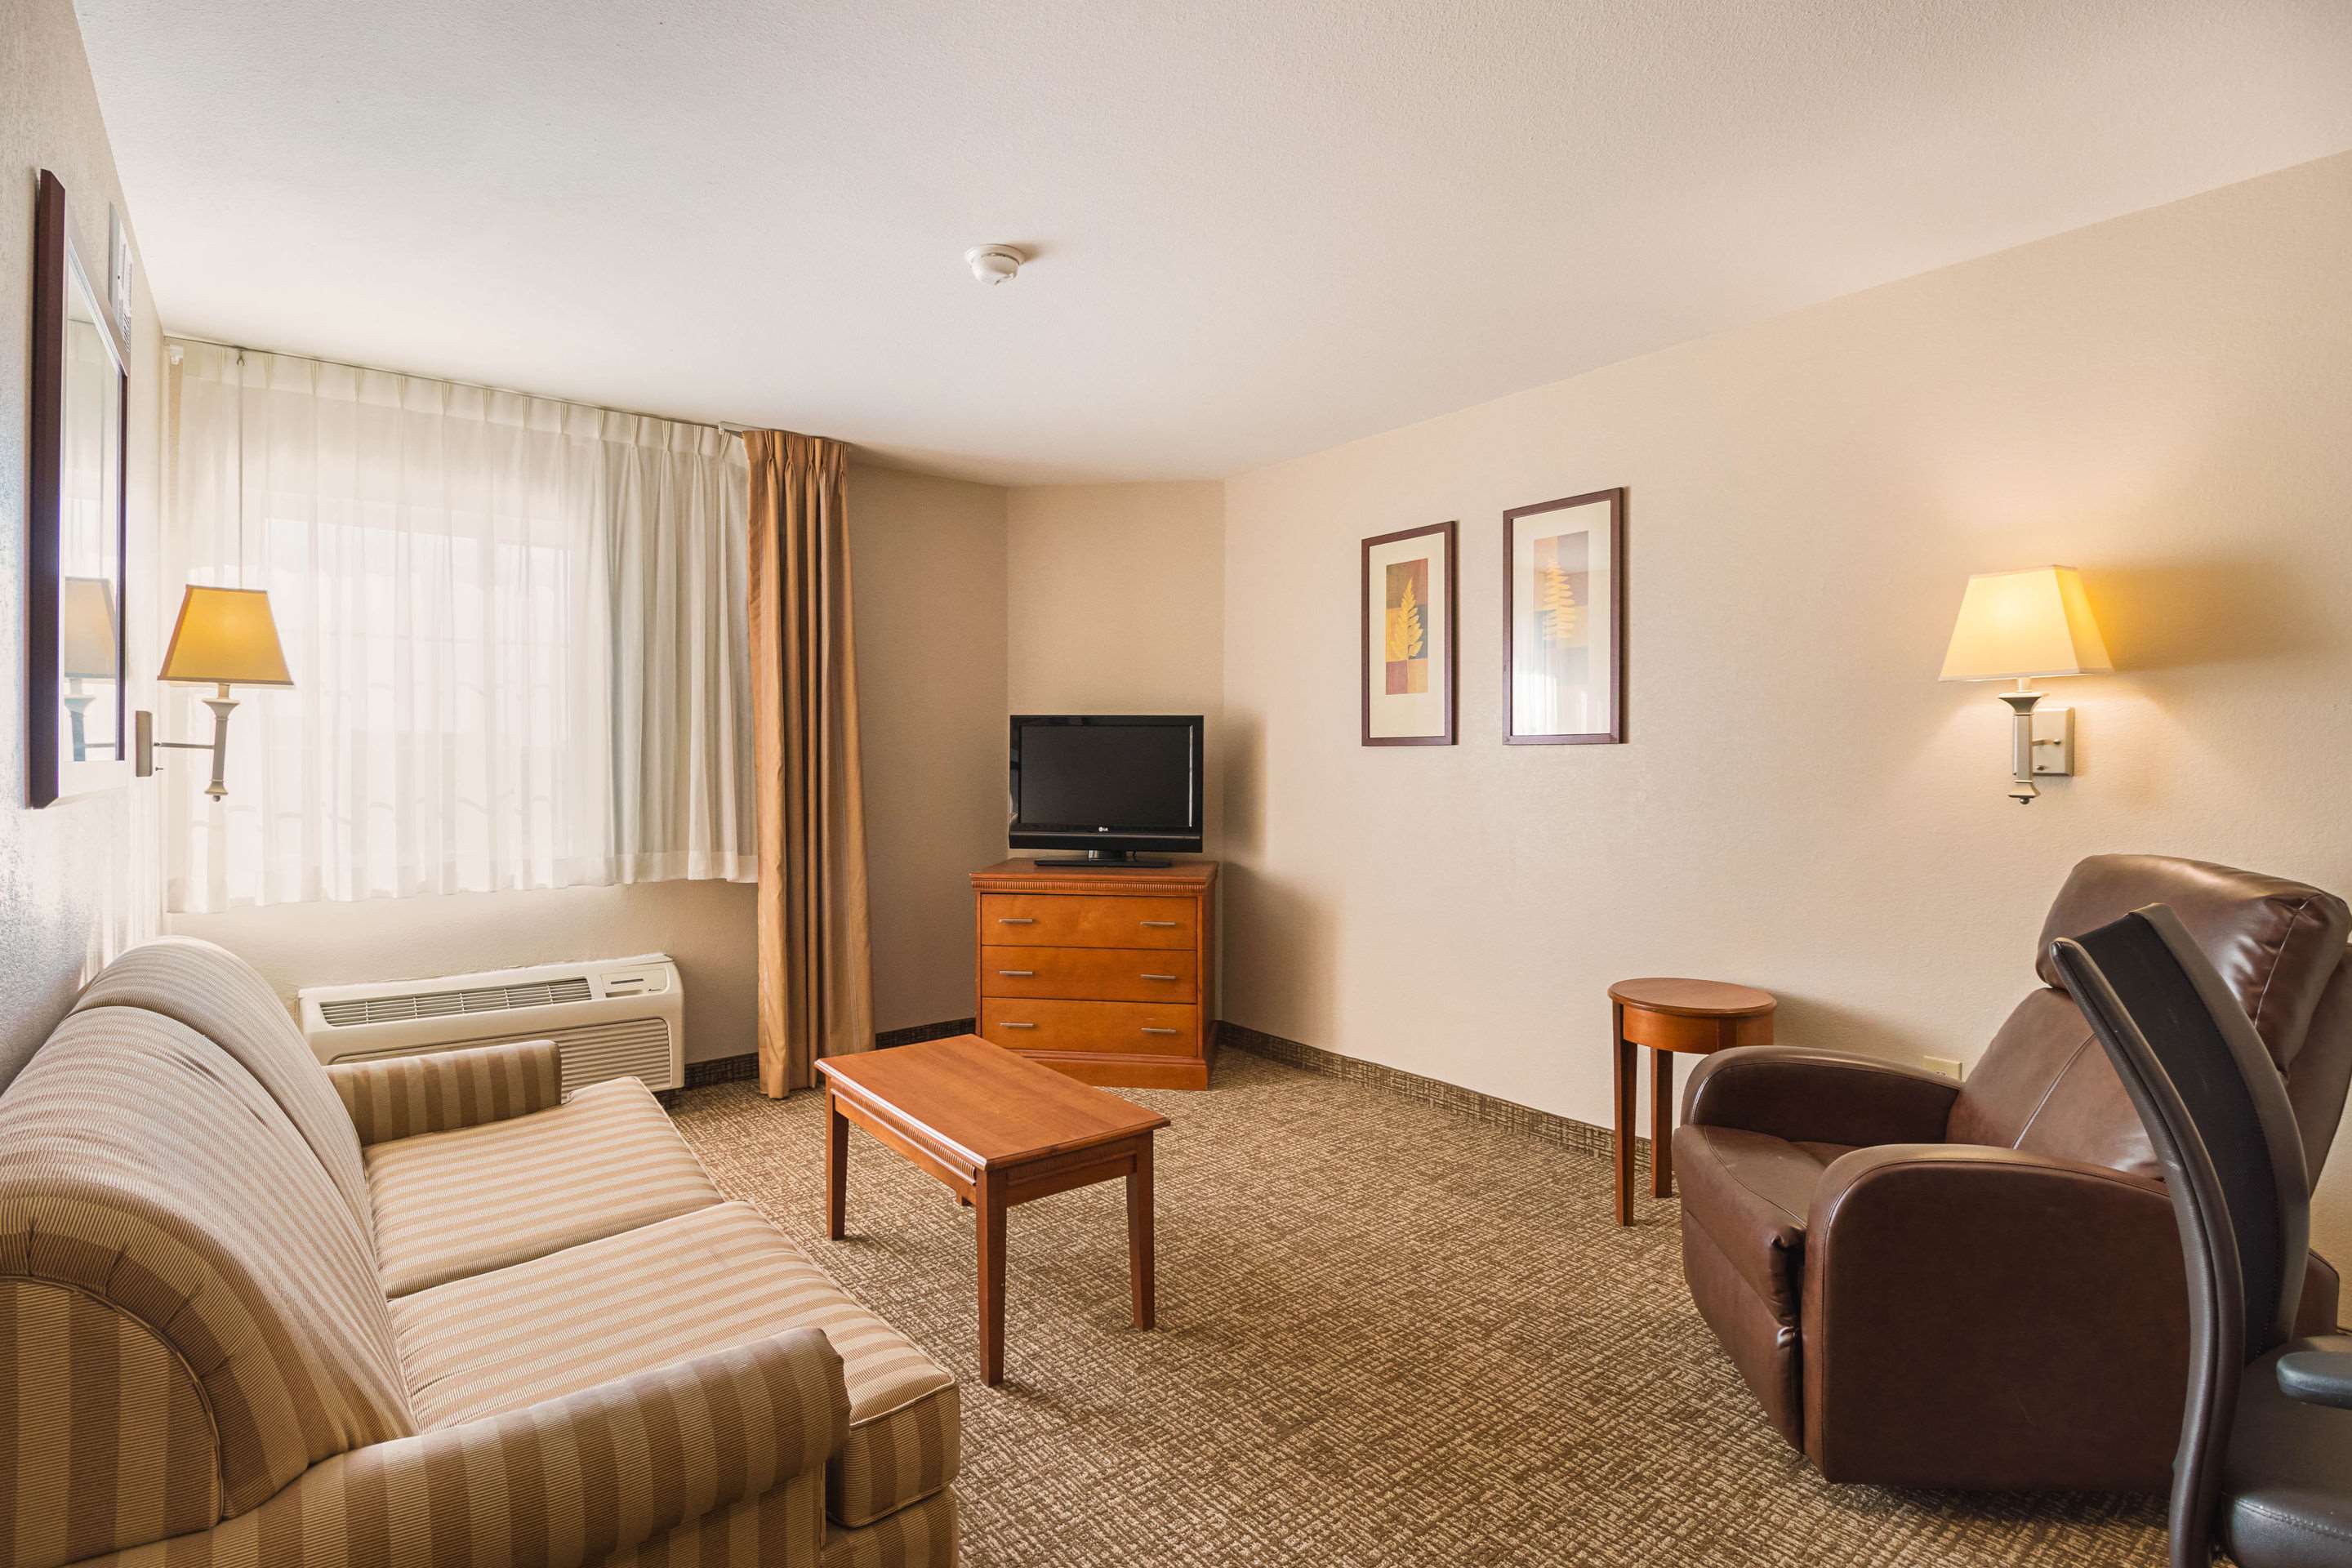 Quality Inn & Suites Waterloo - Cedar Falls - Cedar Valley Photo